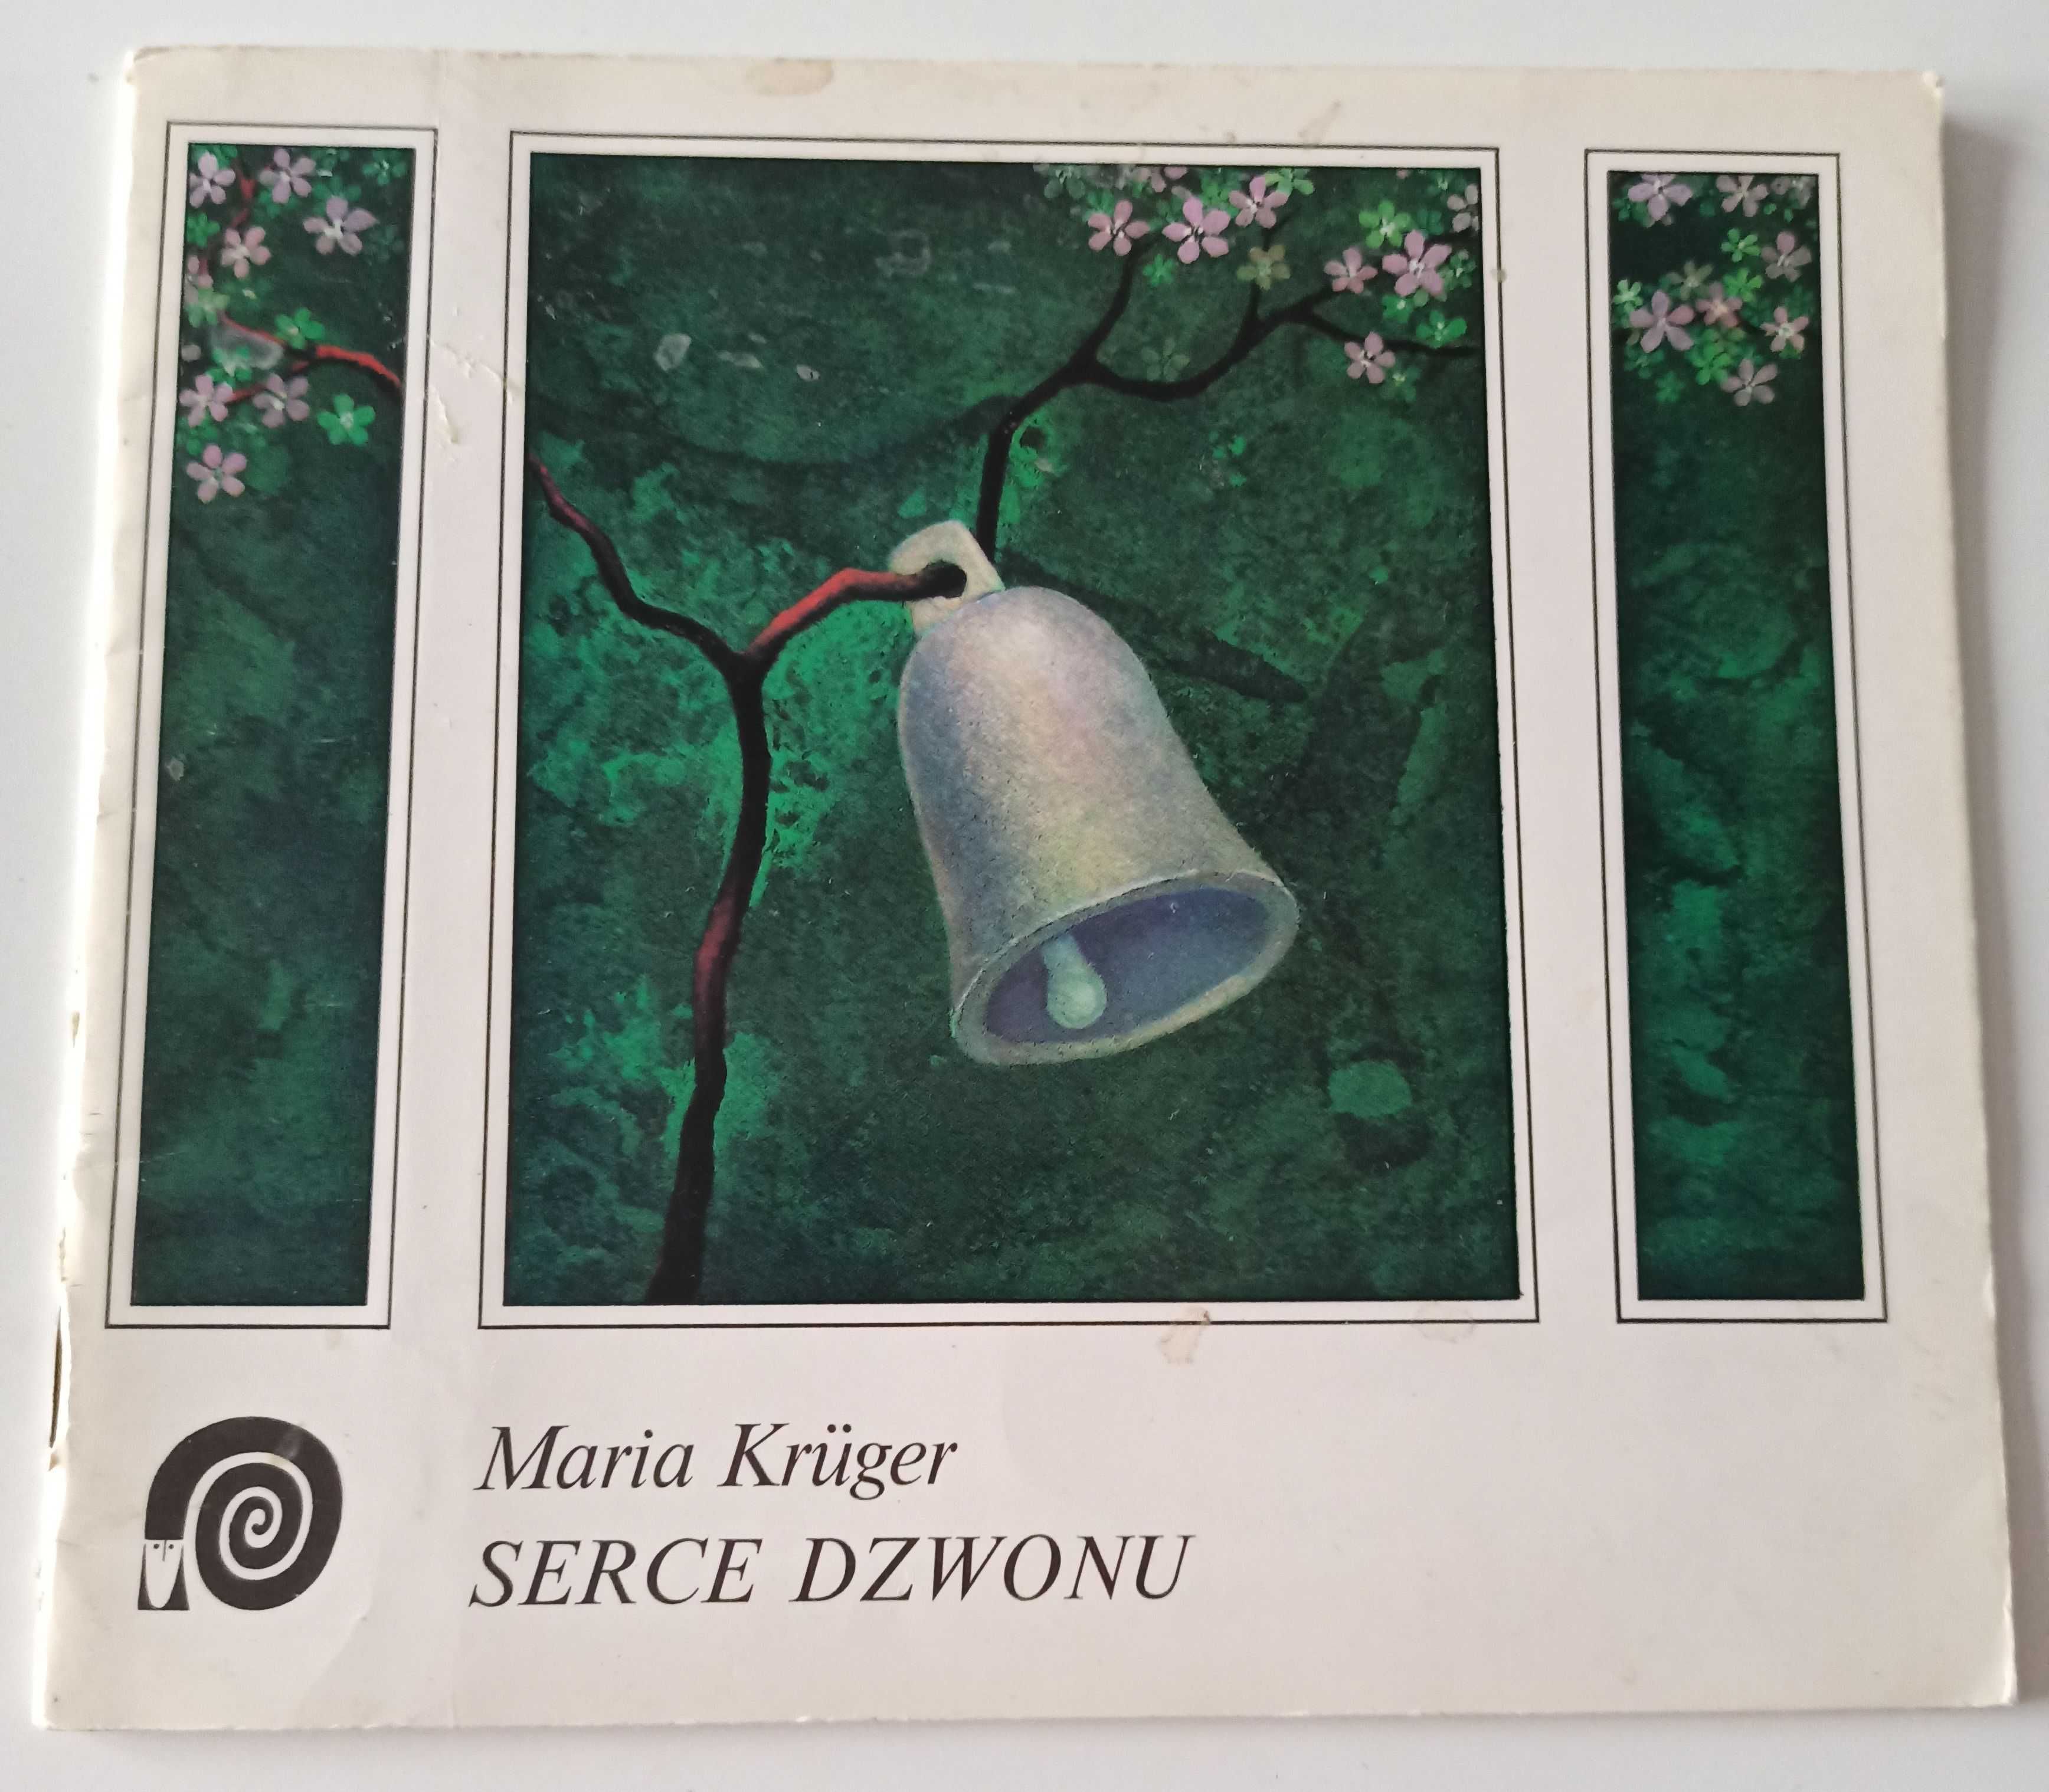 Maria Kruger Serce dzwonu stare wydanie 1981